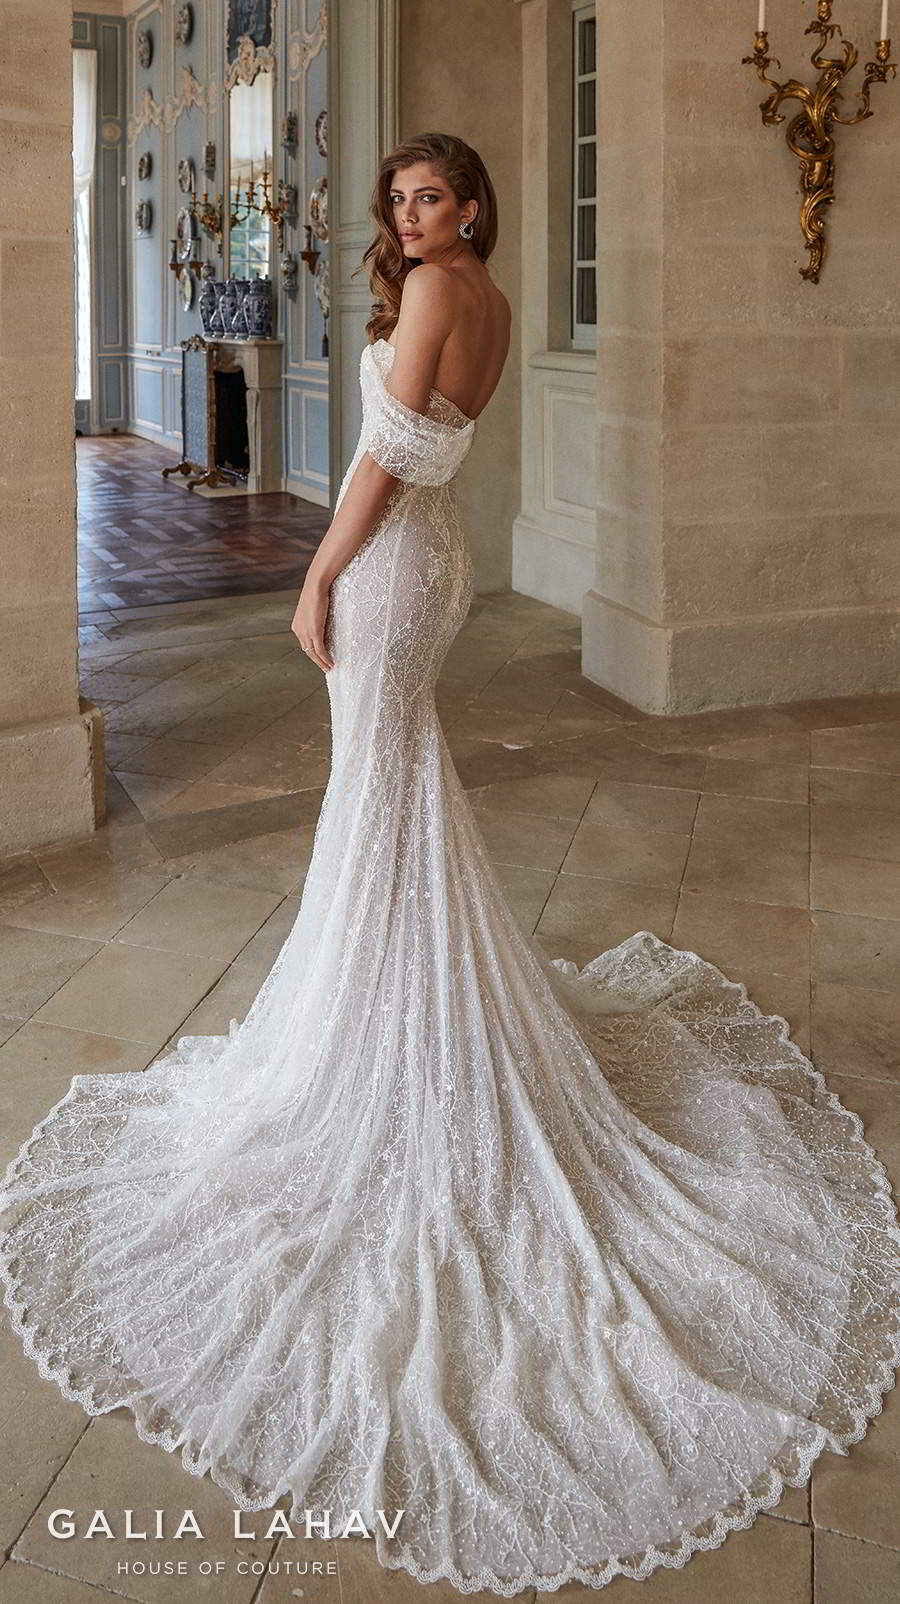 Galia Lahav's Fall 2020 Wedding Dresses Are Dazzling — “Fancy